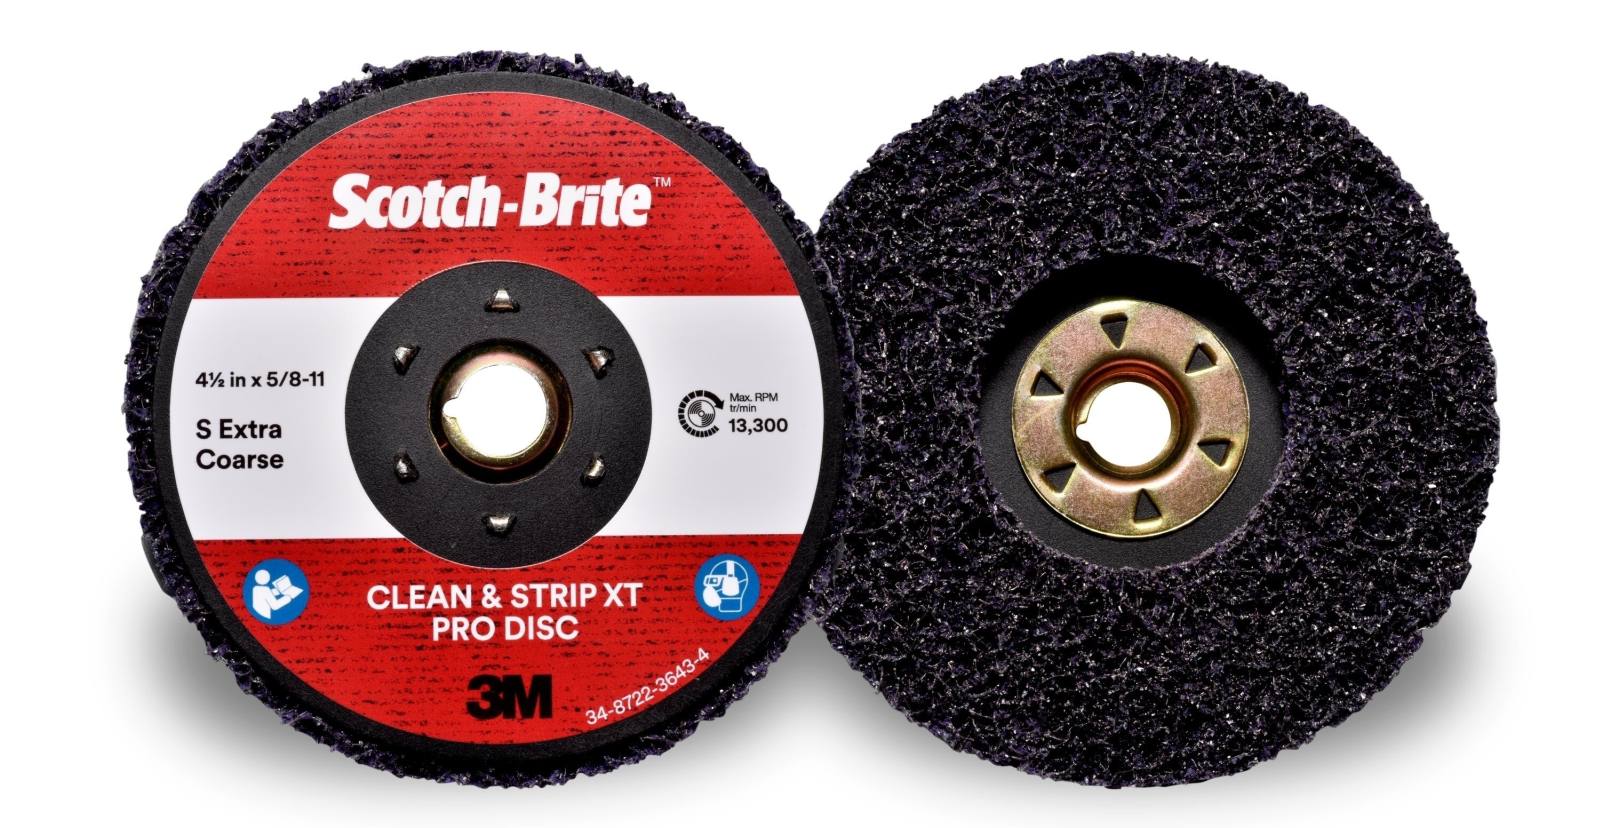 3M Scotch-Brite coarse cleaning disc XT-DB Pro, 178 mm x 22 mm, S, extra coarse